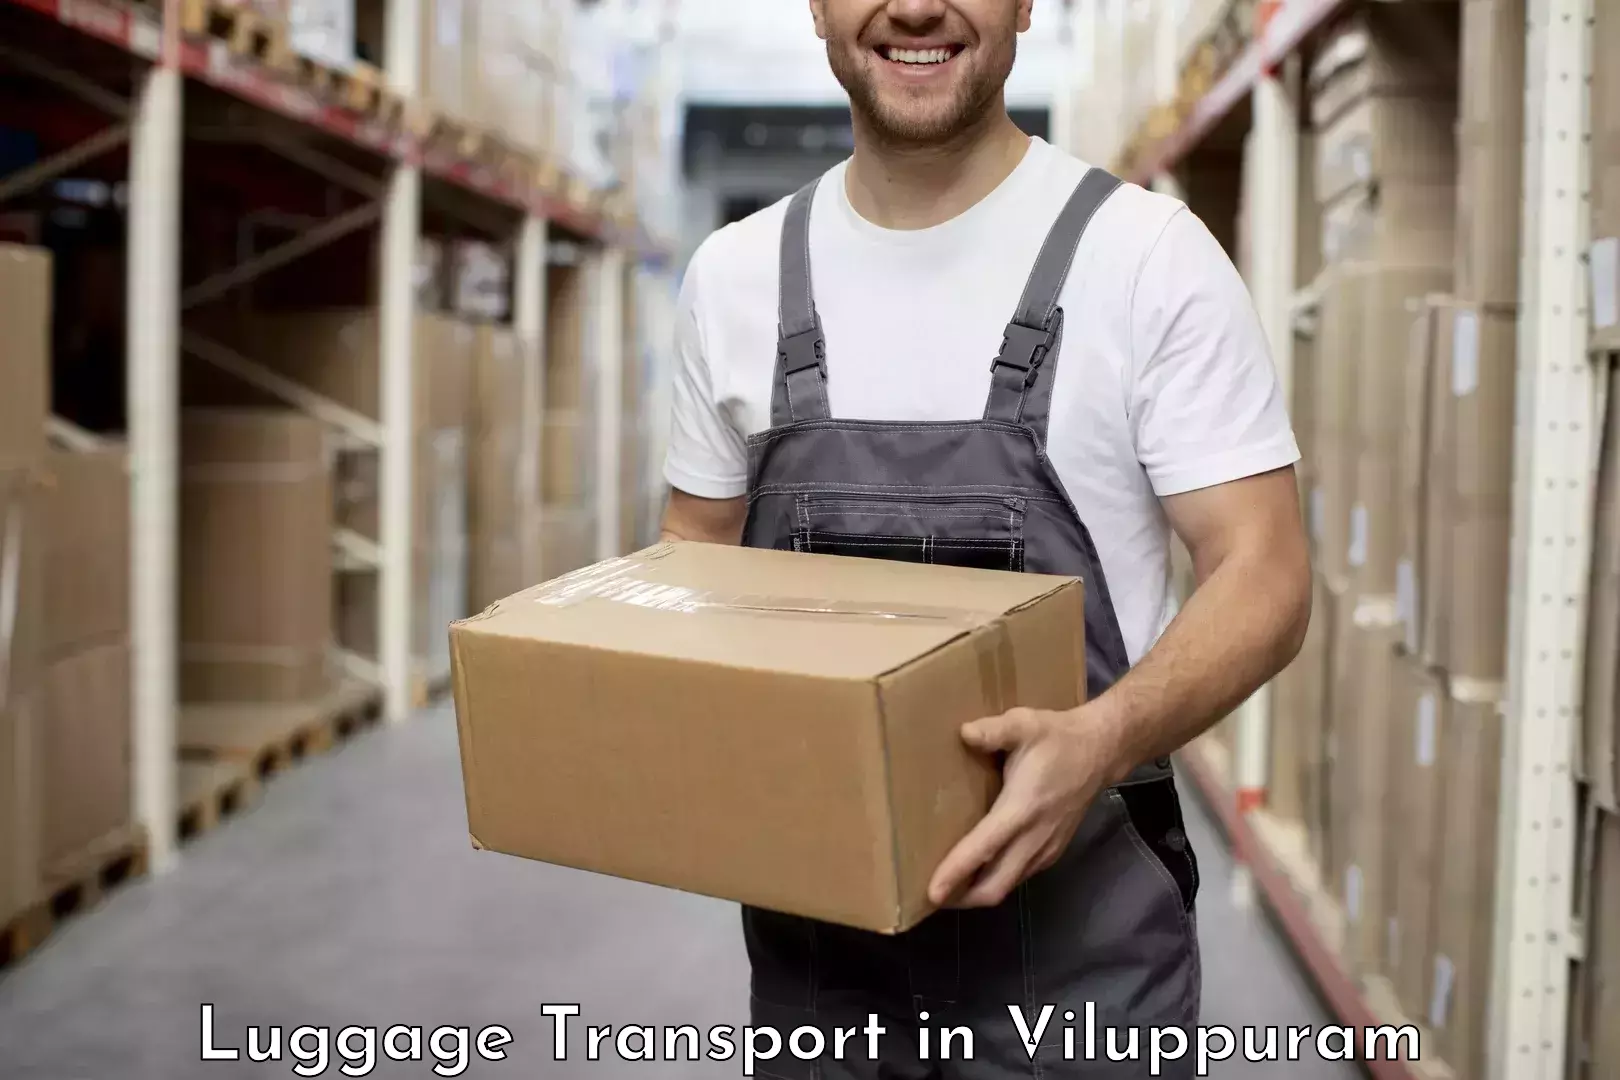 Regional luggage transport in Viluppuram